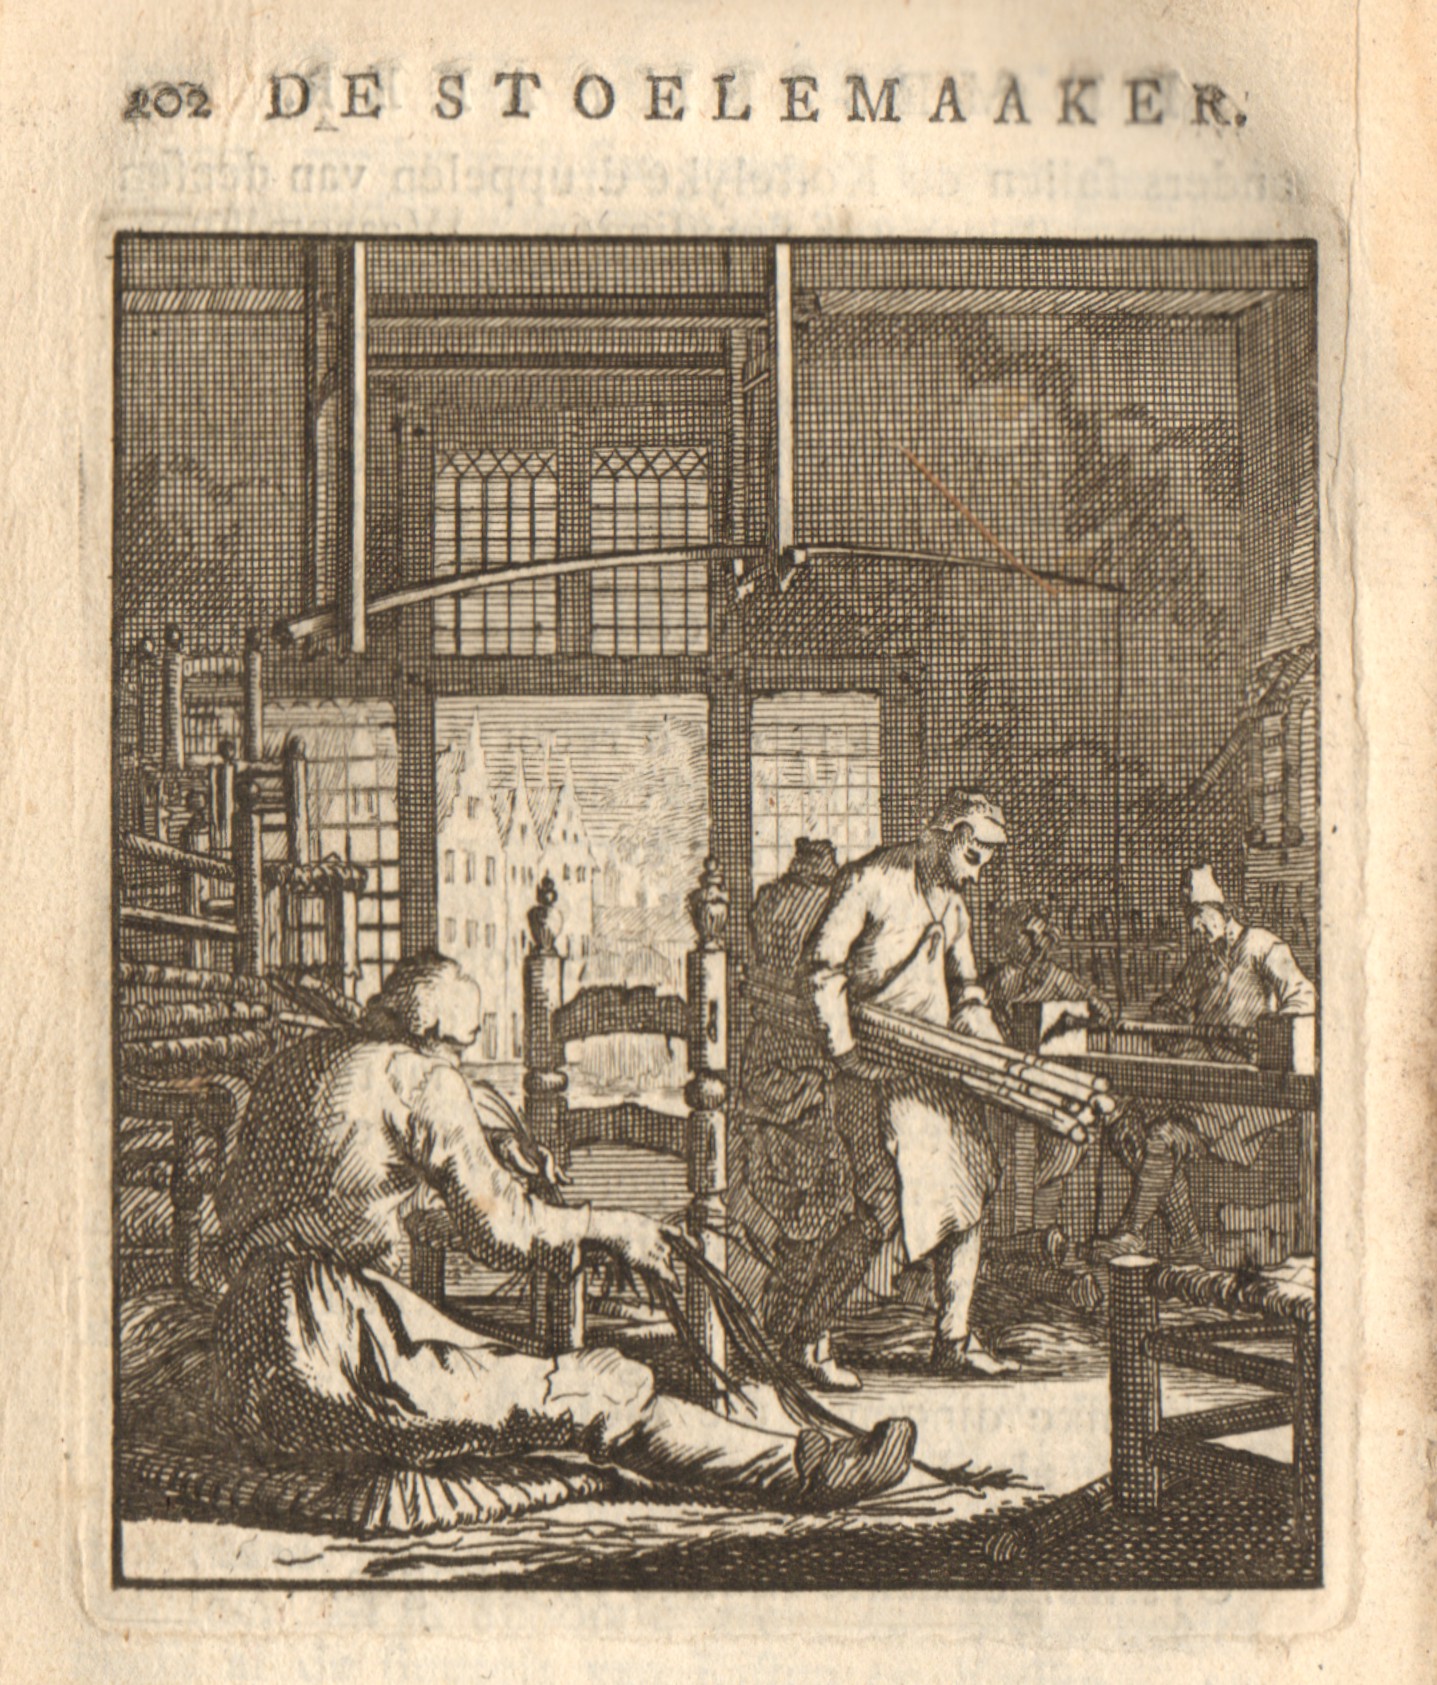 De stoelenmaker, 18e eeuw.